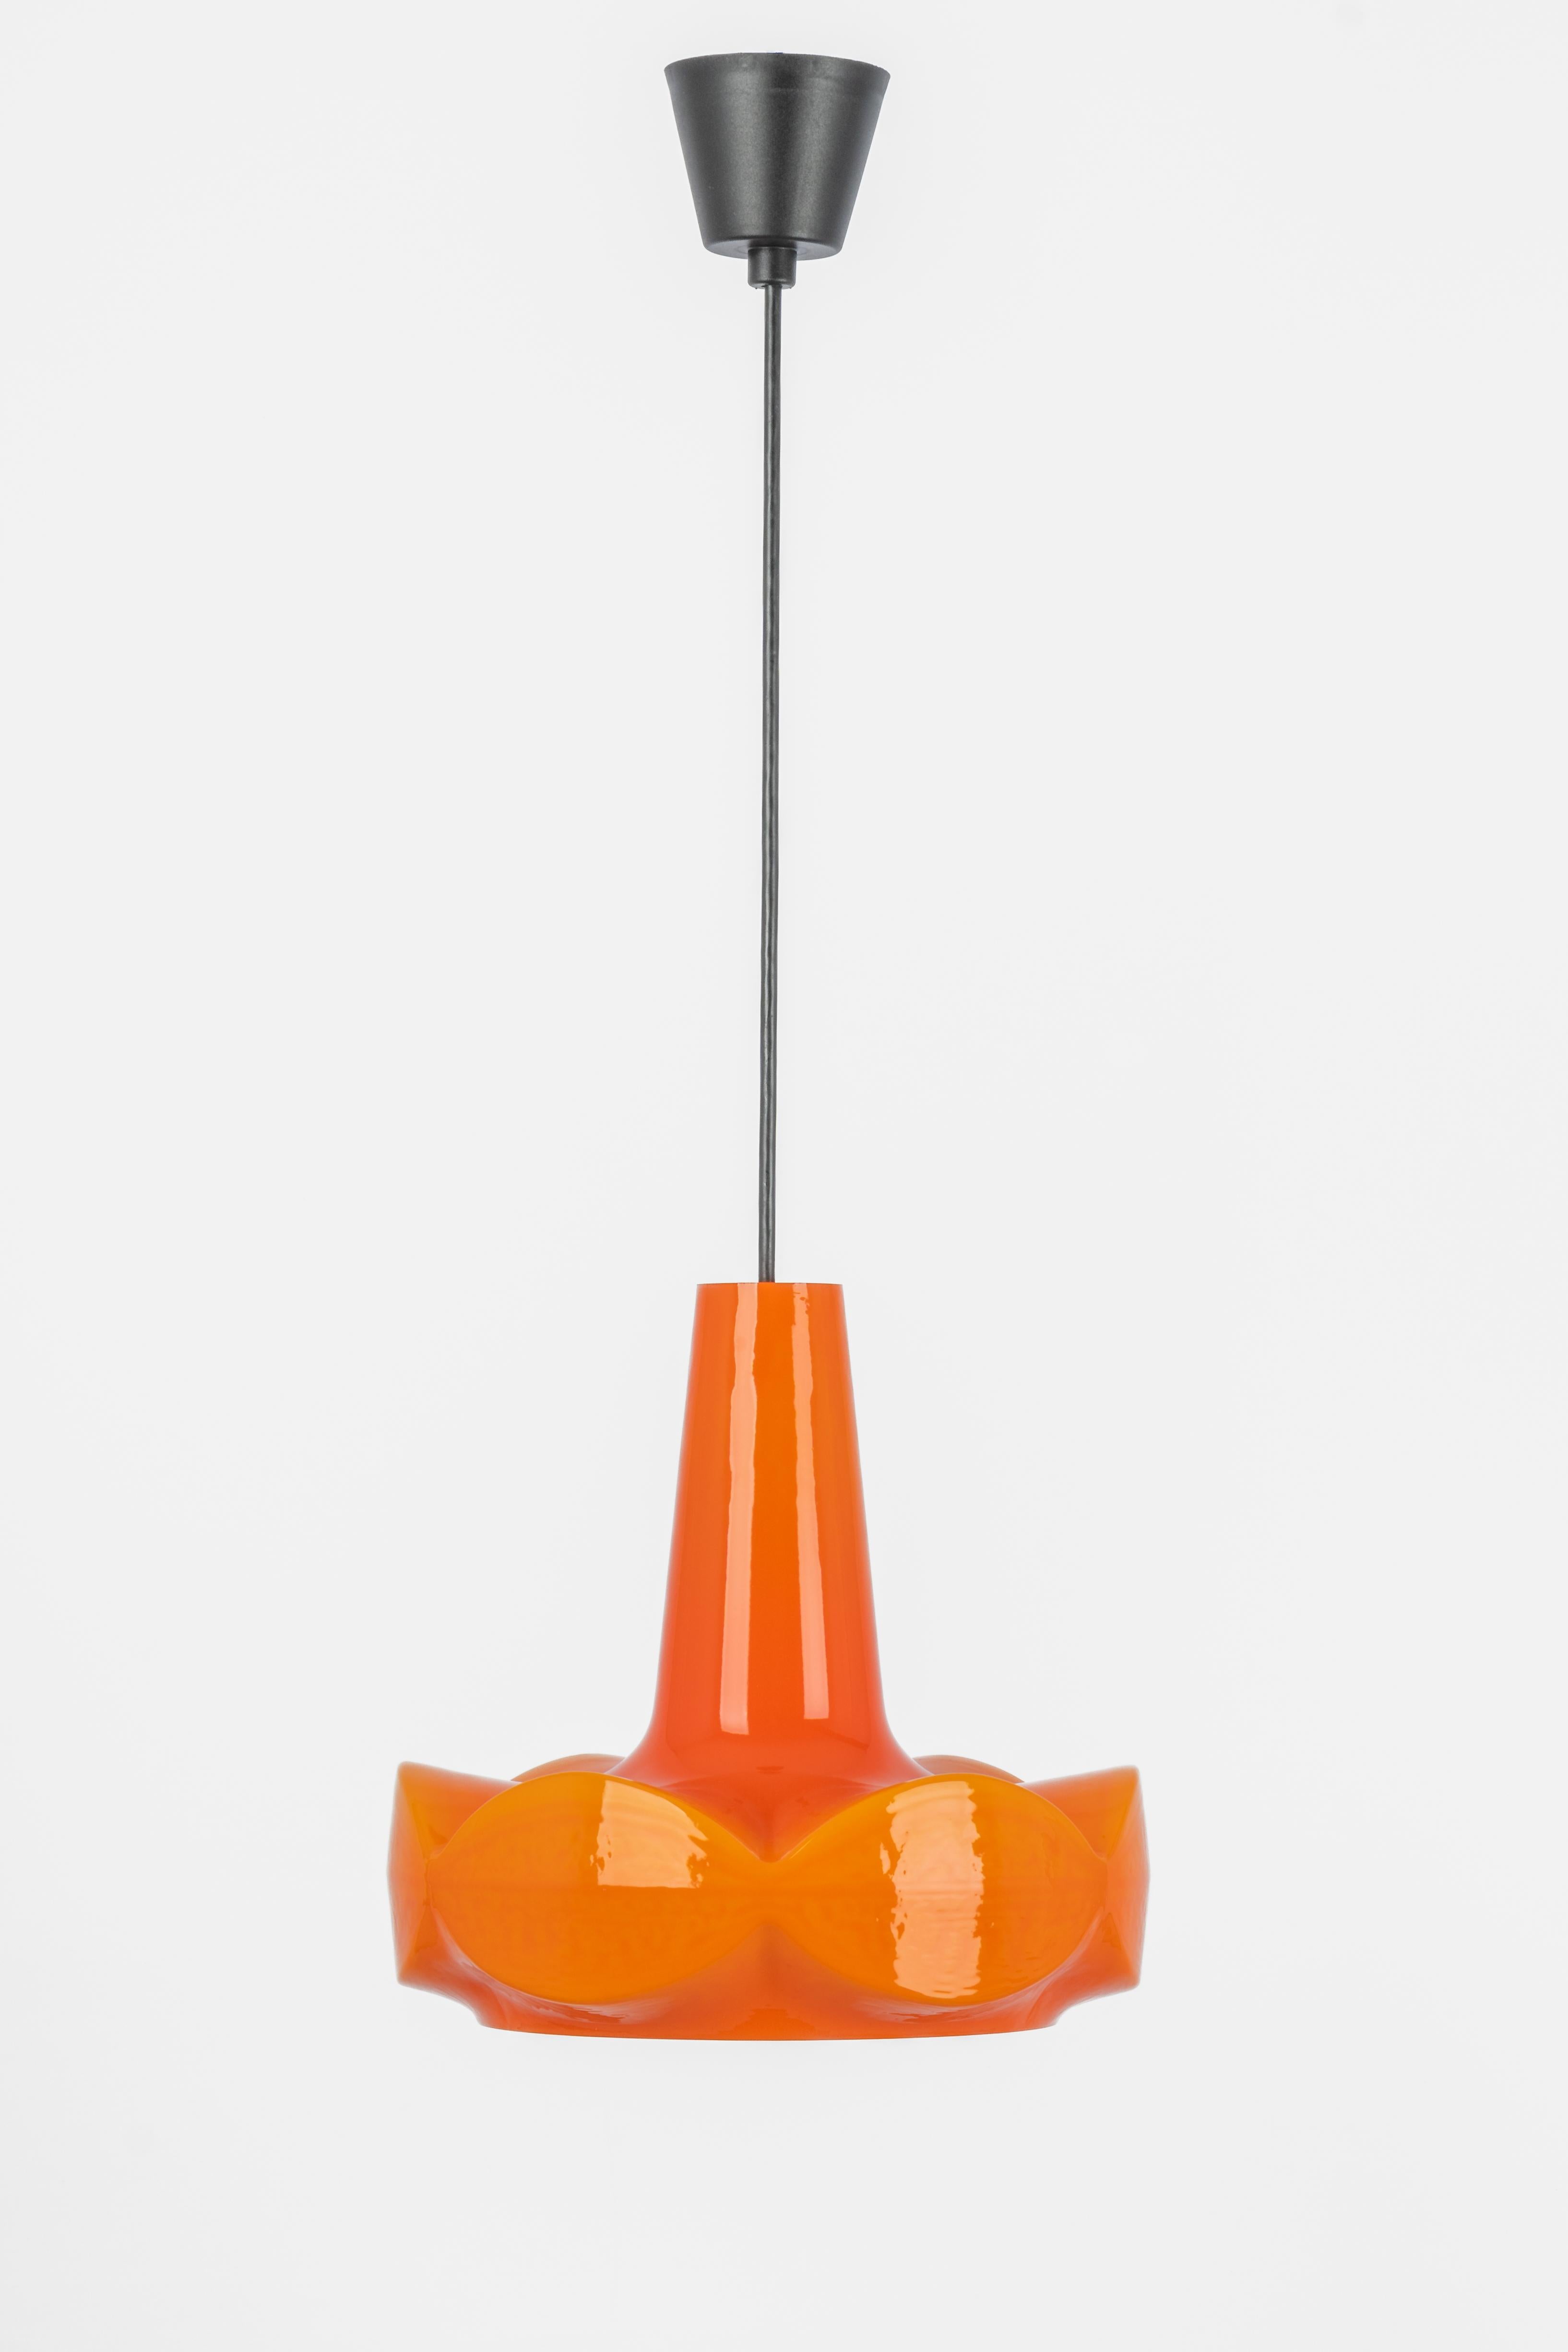 Petite Orange Glass Pendant Light by Peill Putzler, Germany, 1970 For Sale 6